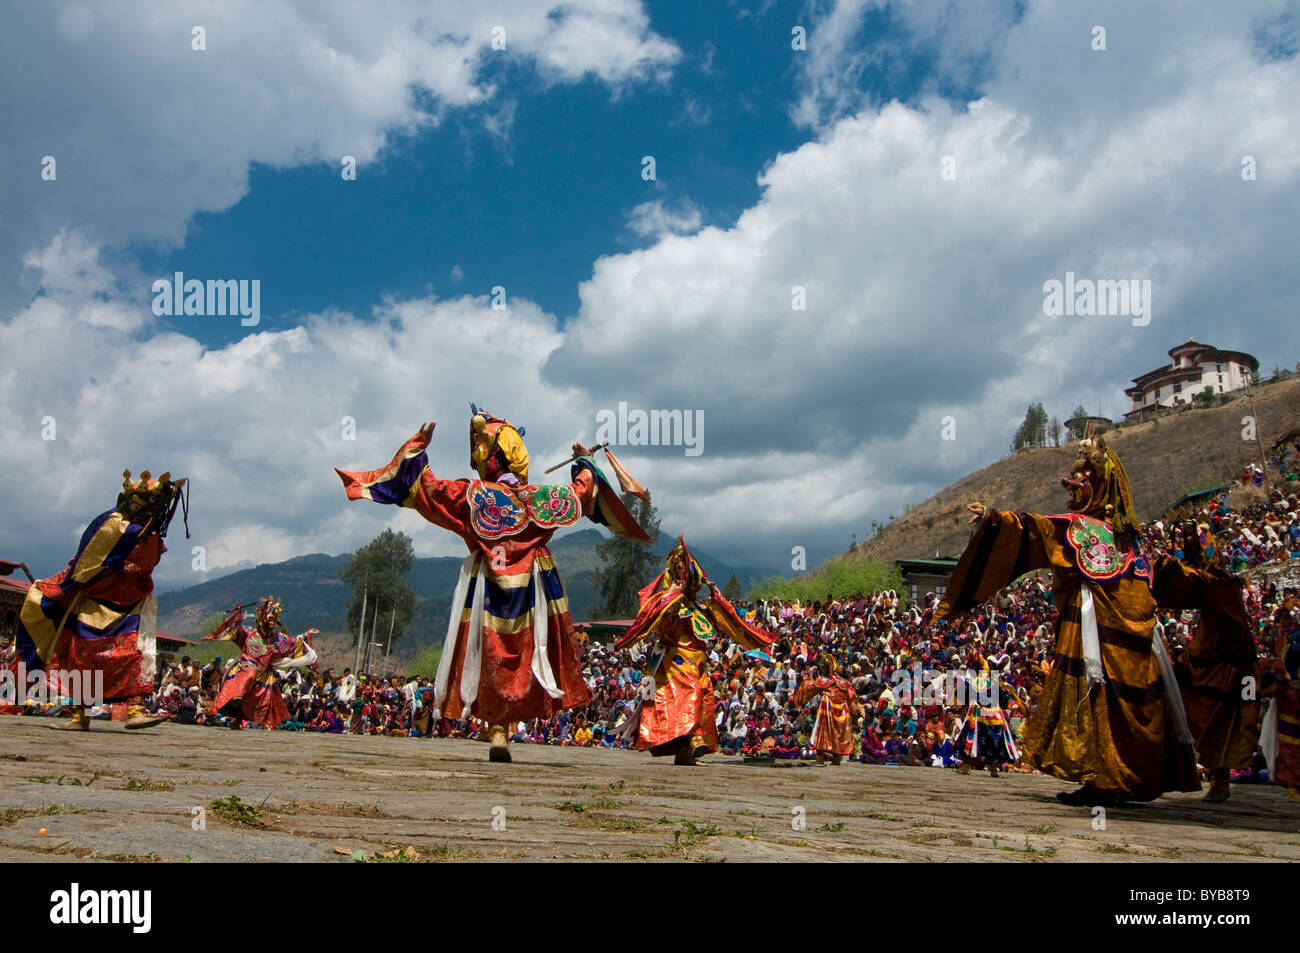 Religious festival with male visitors and dances, Paro Tsechu, Bhutan, Asia Stock Photo